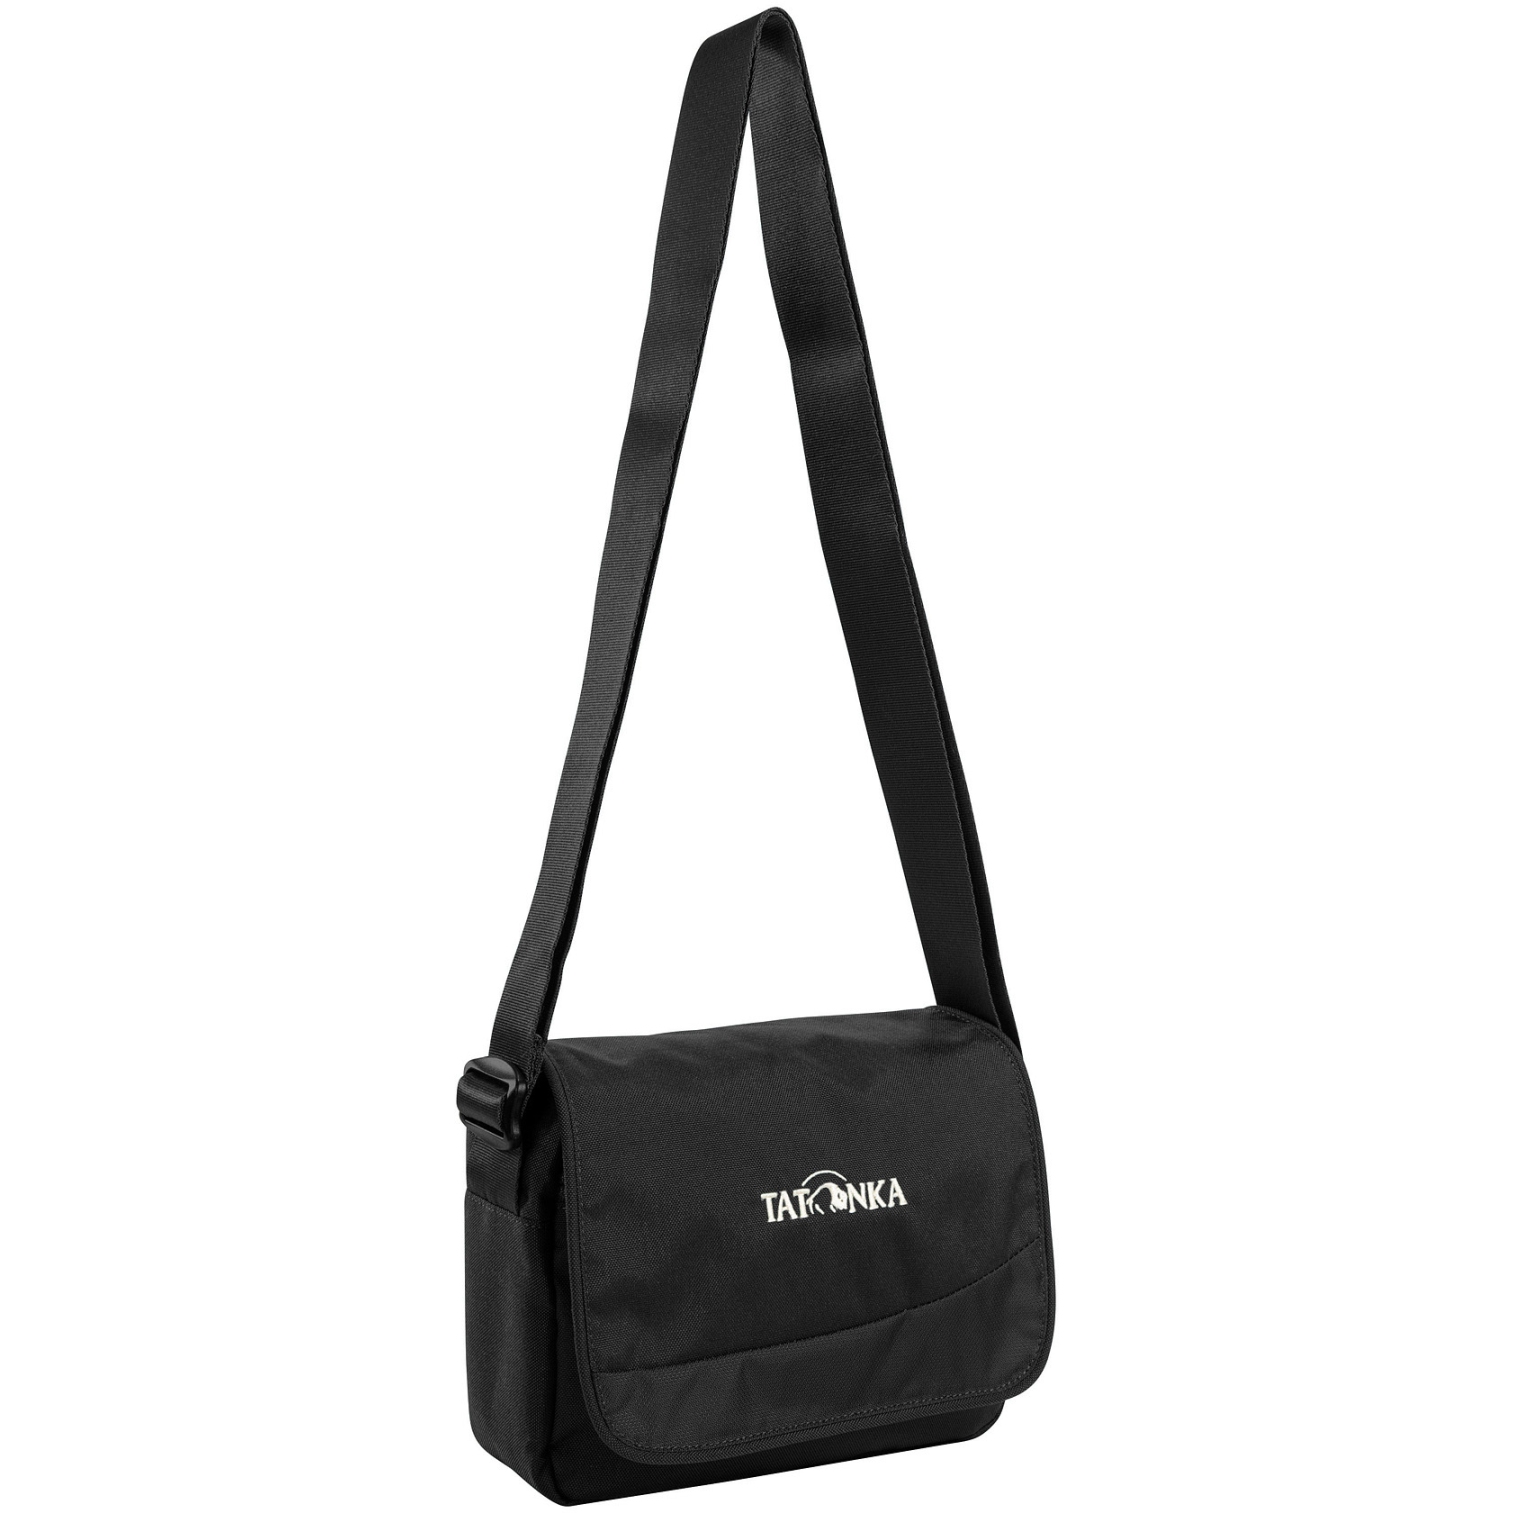 Productfoto van Tatonka Cavalier Shoulder Bag - black